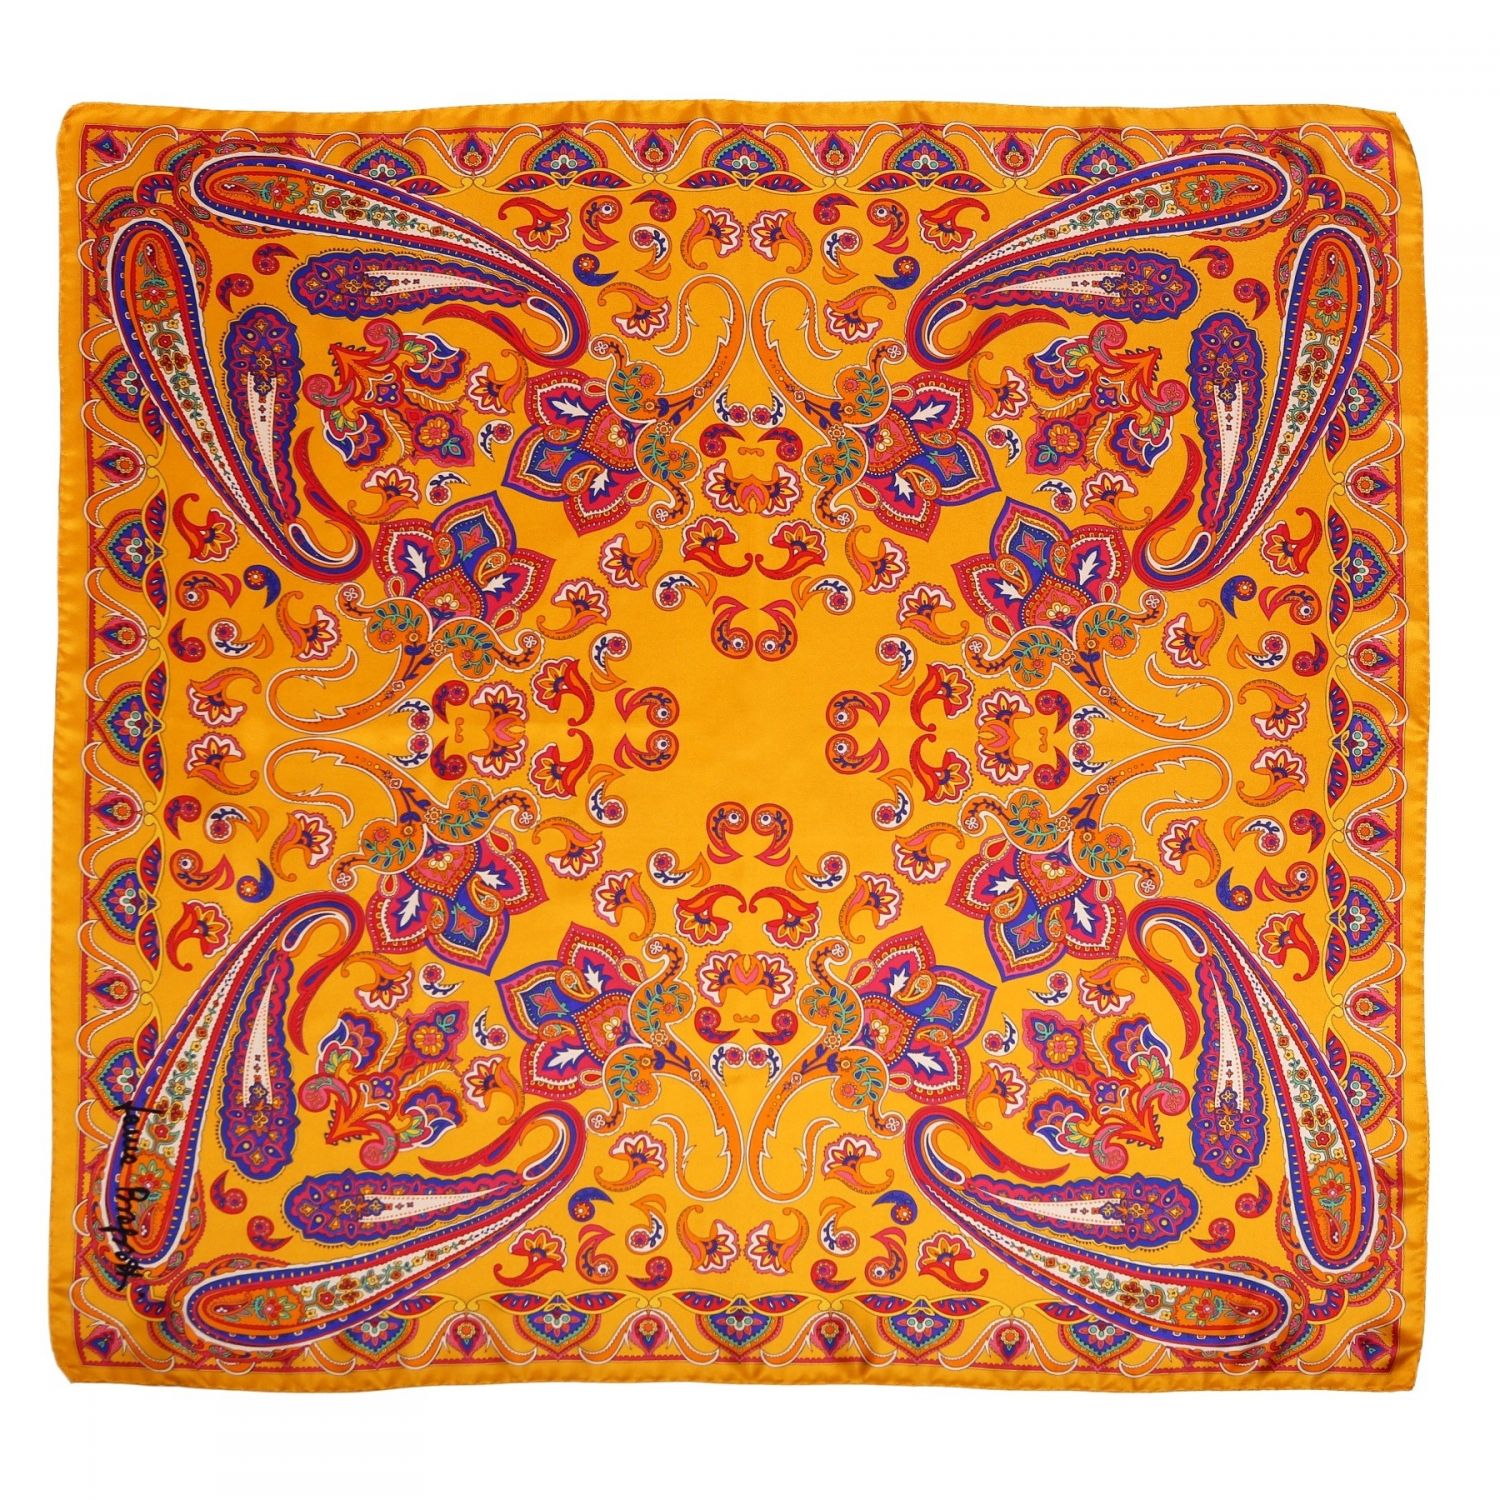 Caspian sunset saffron silk scarf